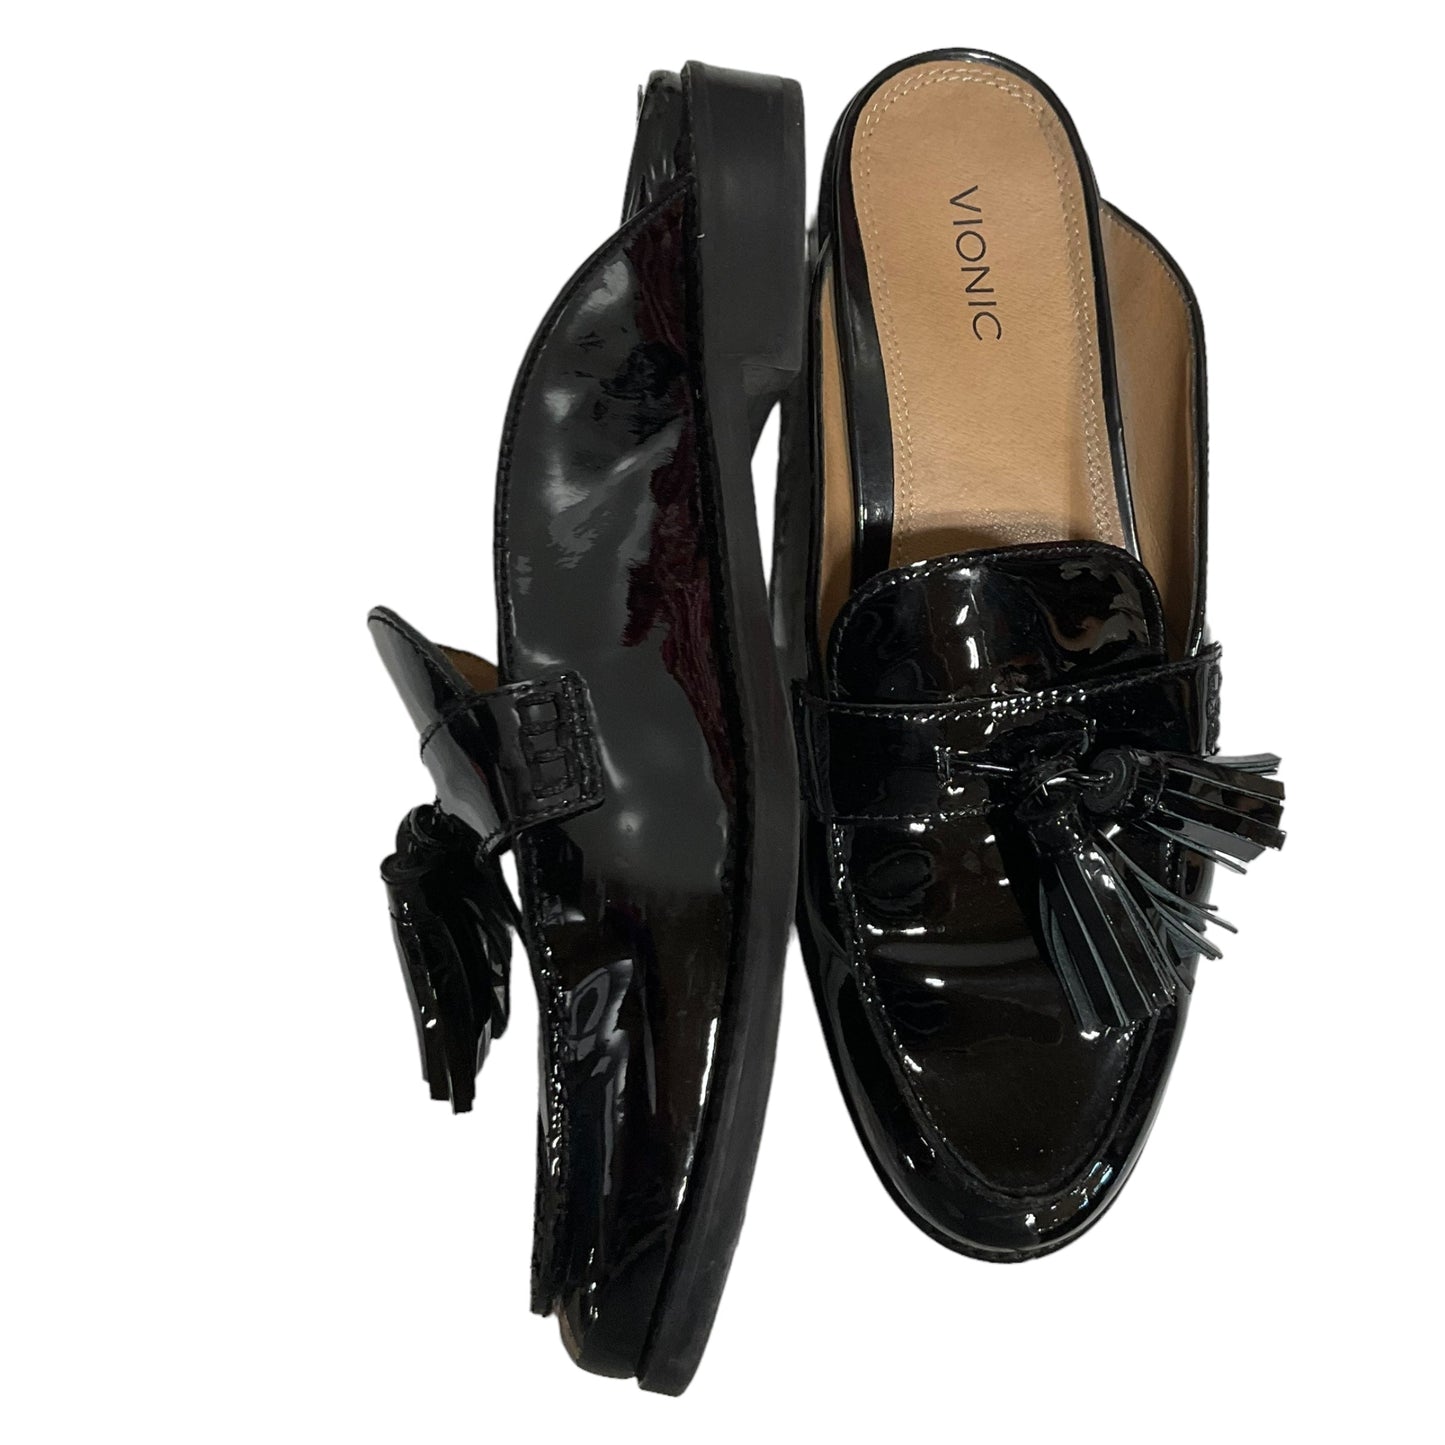 Black Shoes Flats Vionic, Size 9